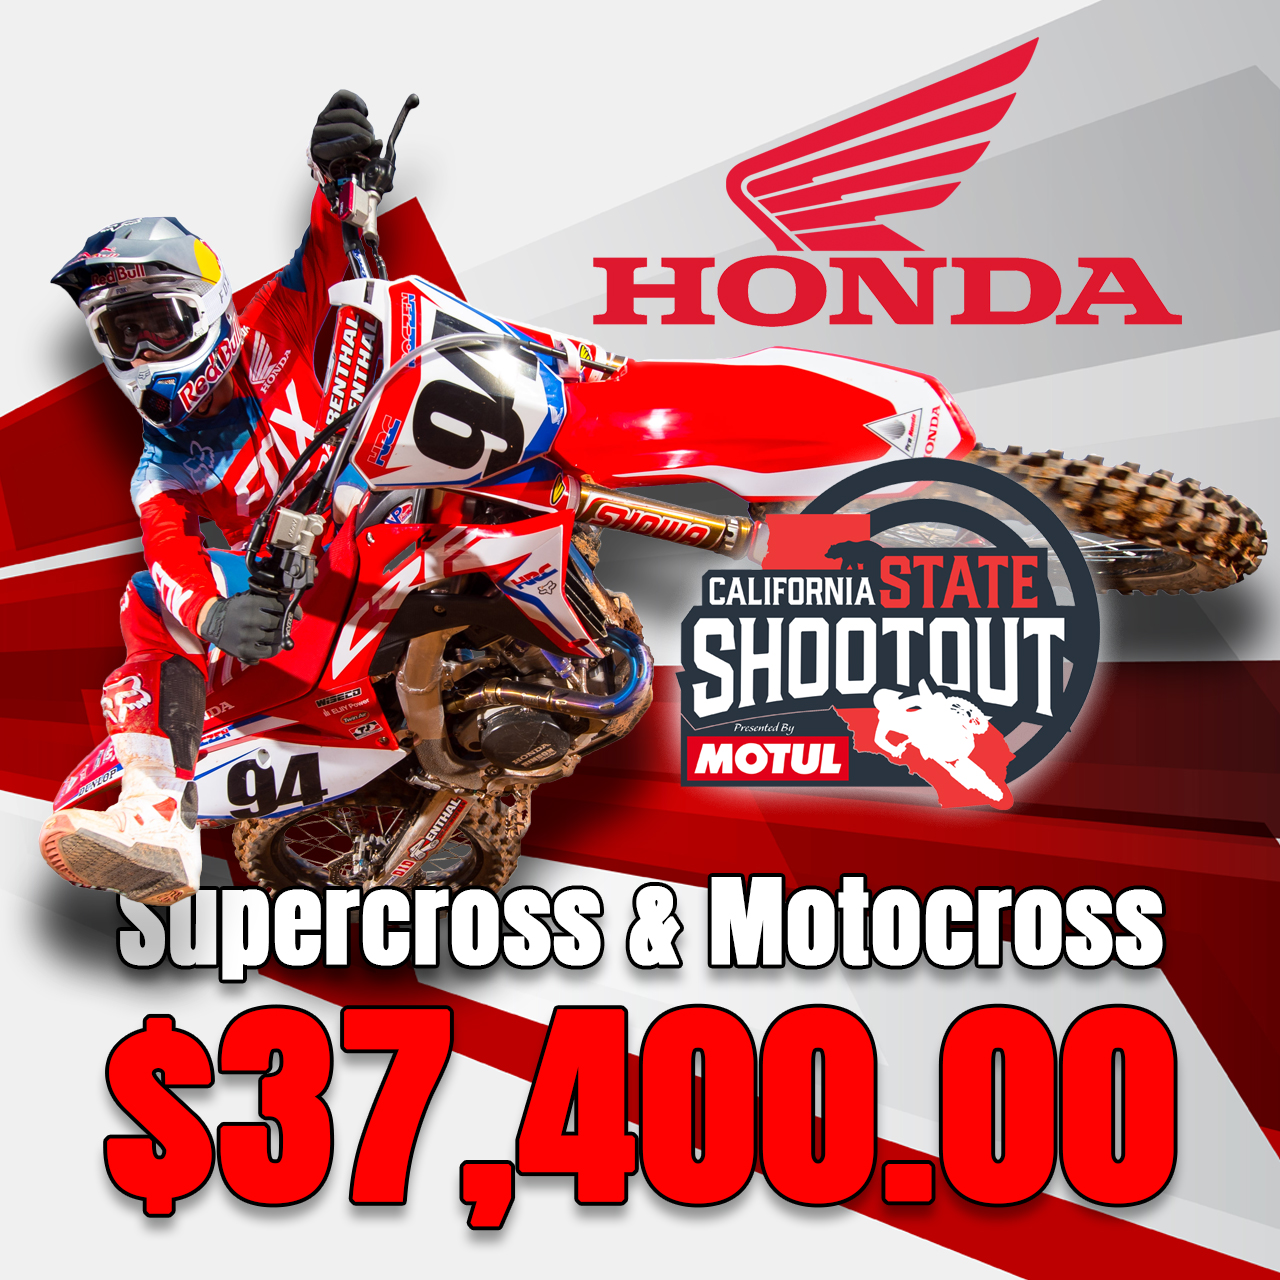 Honda Adds $37,400 to Shootout